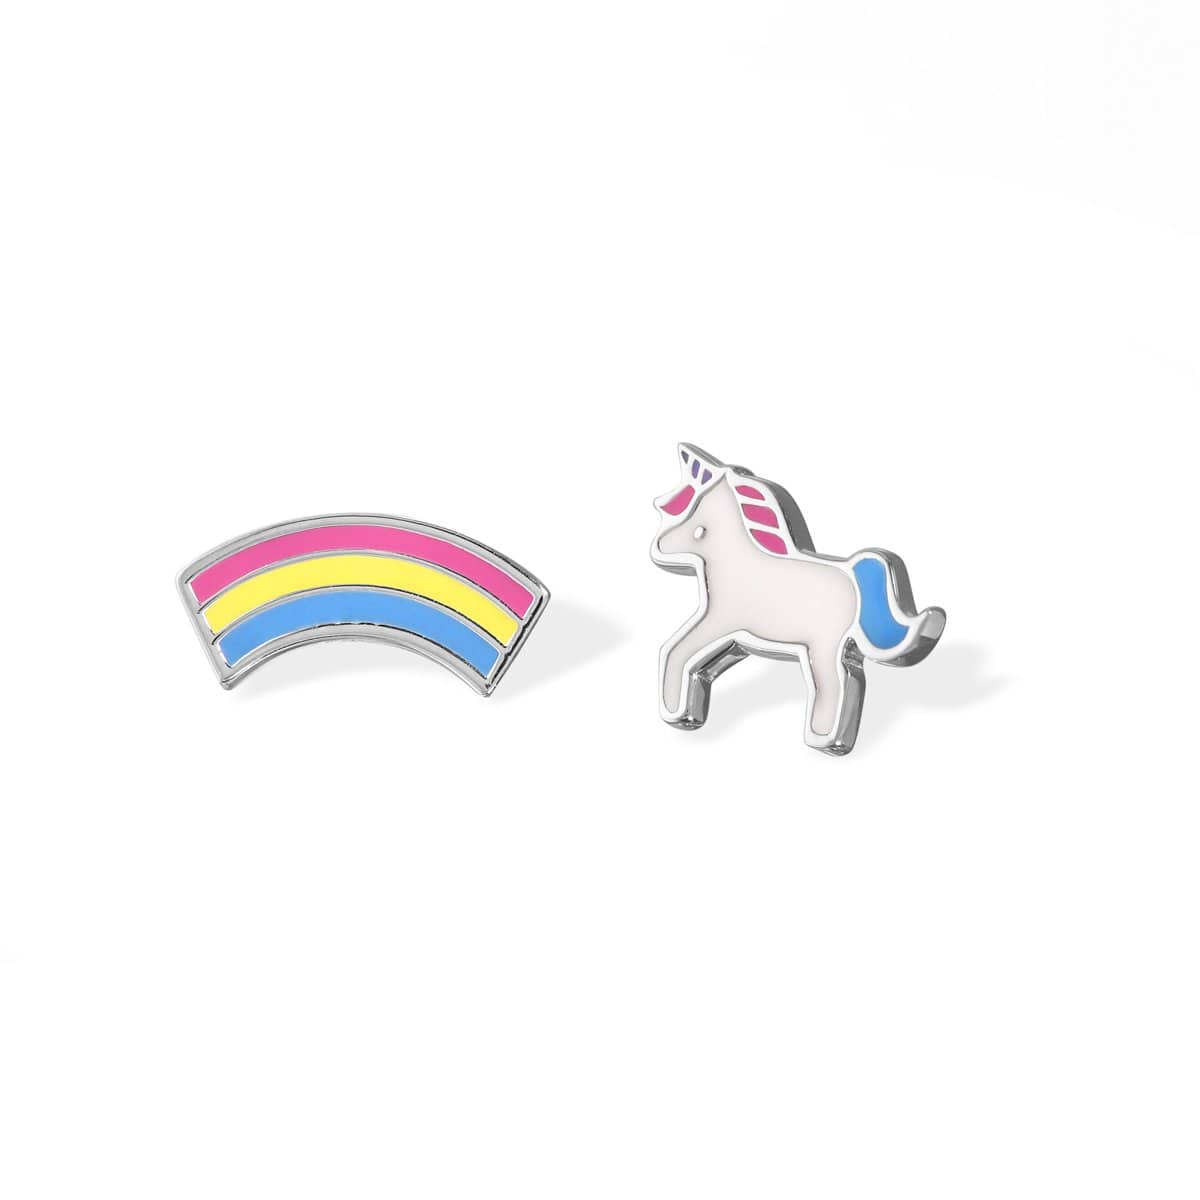 Boma Jewelry Earrings Unicorn and Rainbow Studs